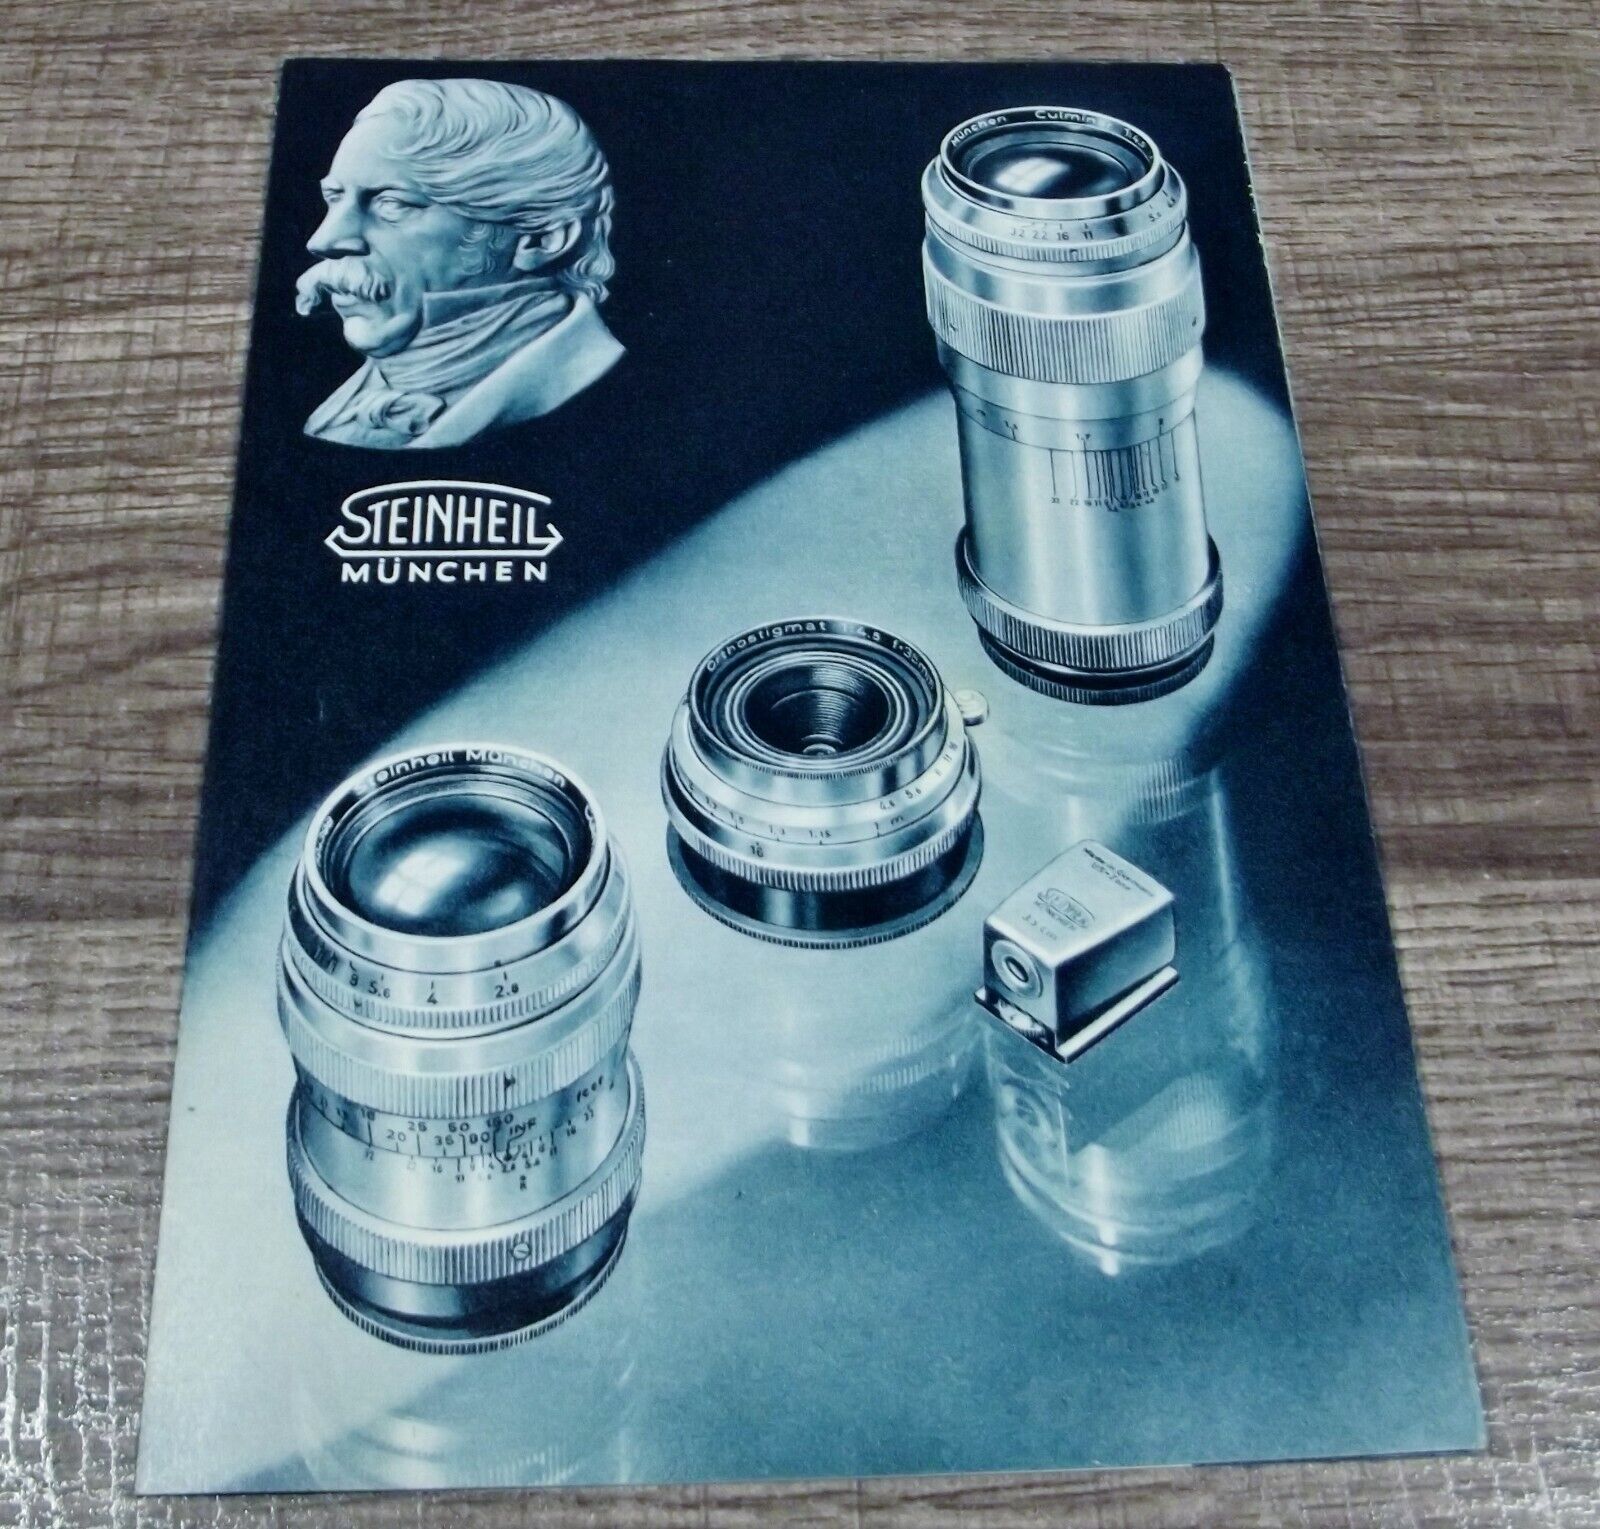 Steinheil Munchen Camera Lenses - Vintage Advertising Brochure / Pamphlet